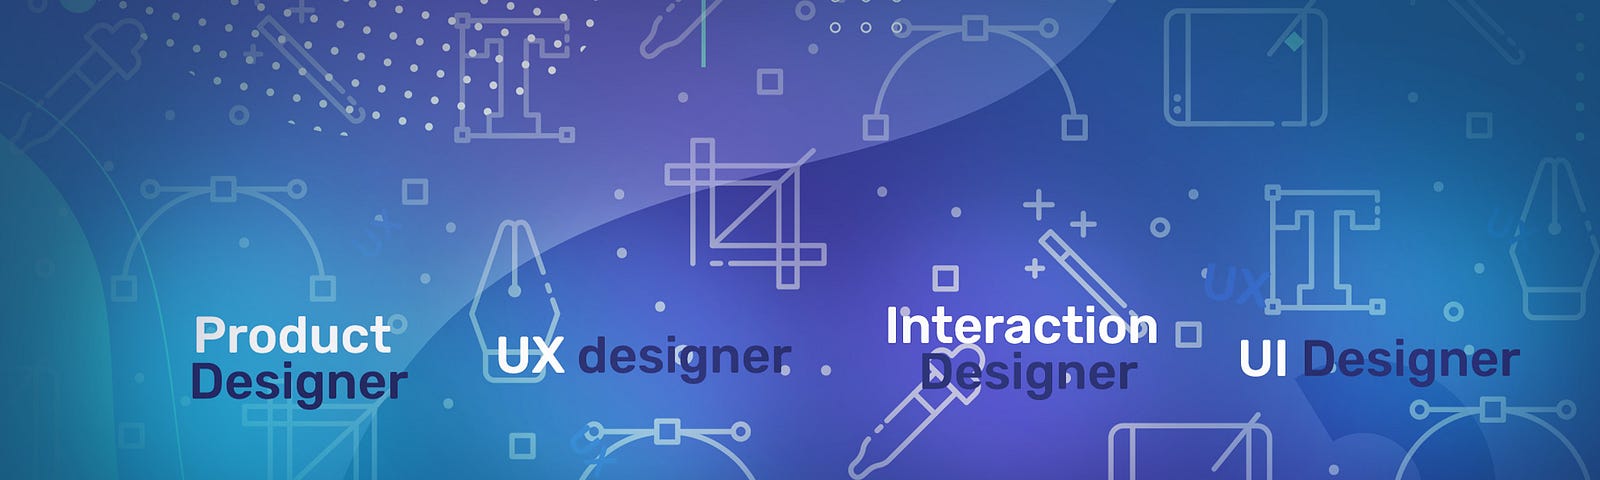 difference between Product Designer/ UX Designer/ UI Designer/ Interaction Designer